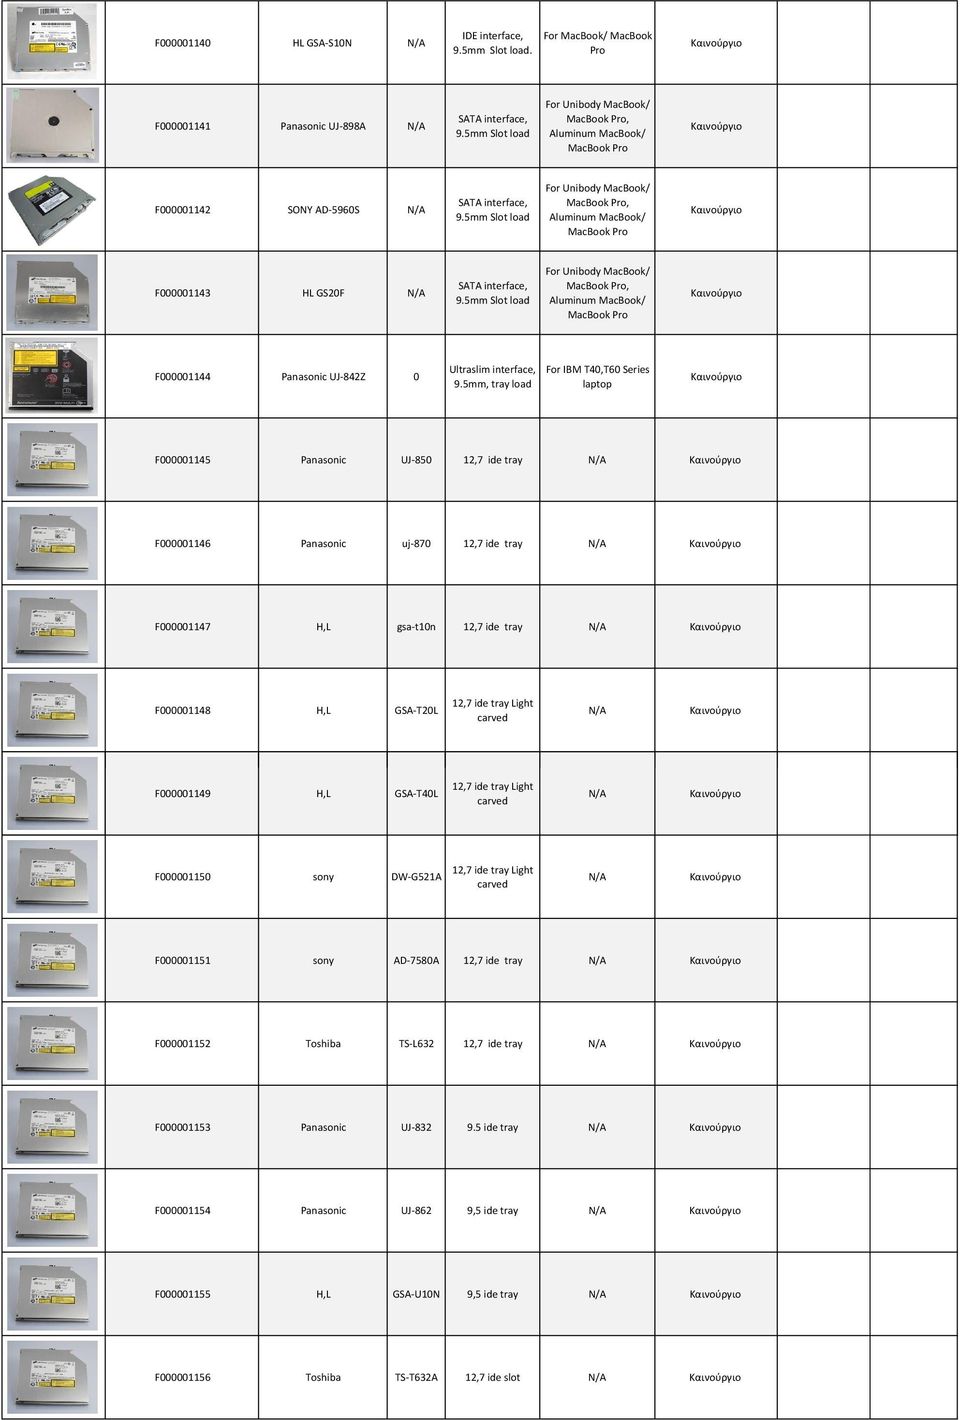 5mm Slot load For Unibody MacBook/ MacBook Pro, Aluminum MacBook/ MacBook Pro Καινούργιο 67,39 82,88 F000001143 HL GS20F N/A 9.